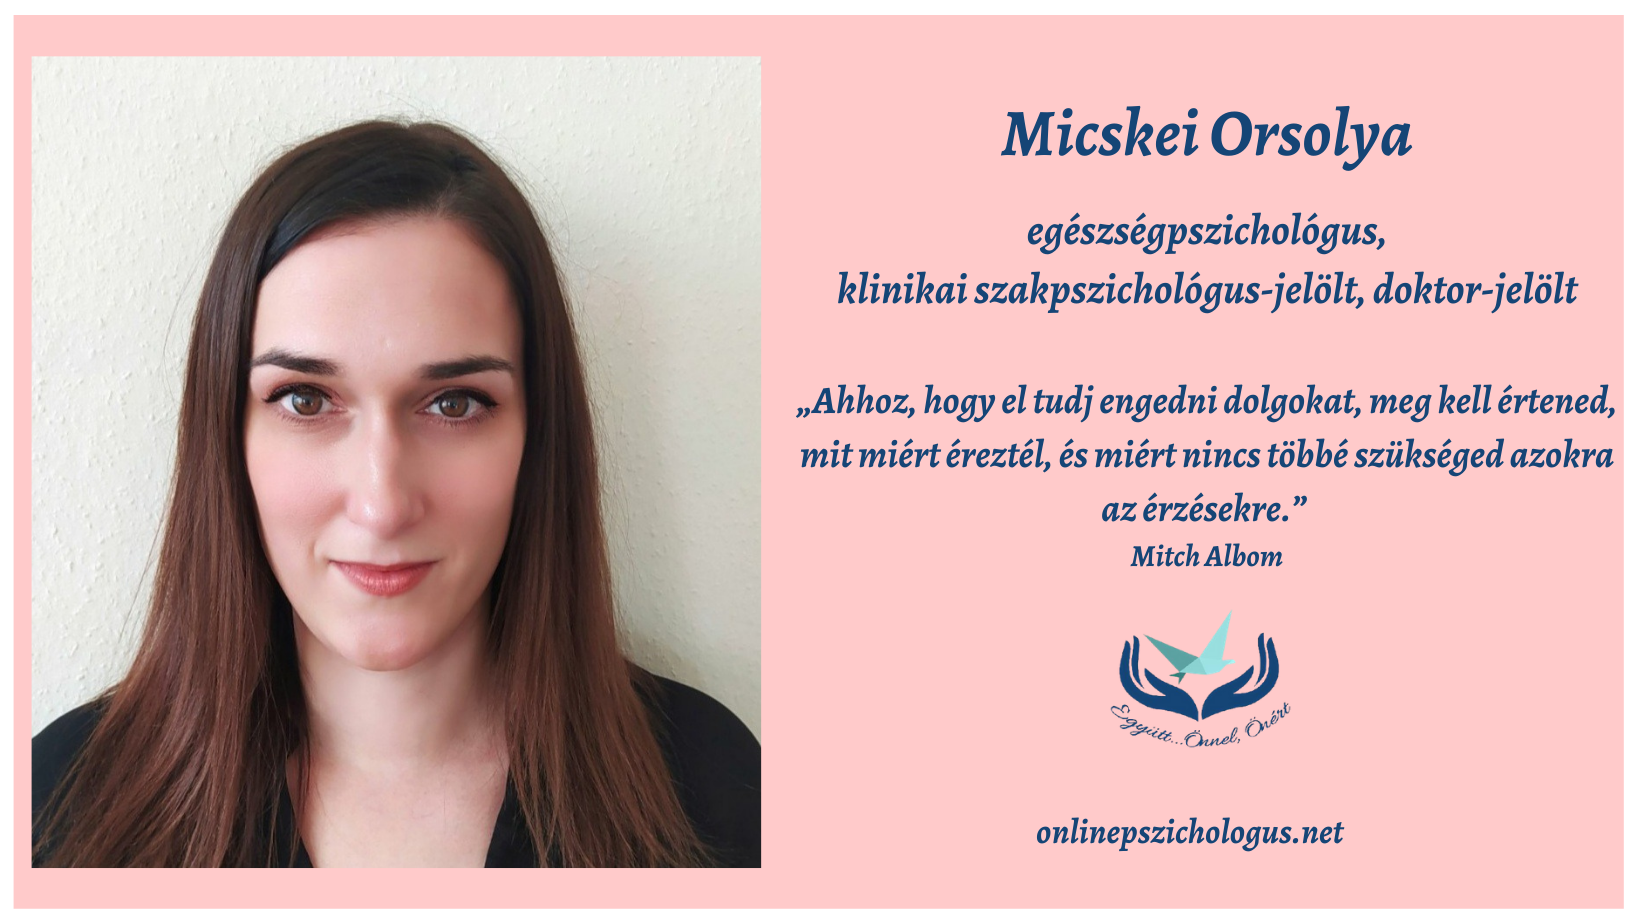 Micskei Orsolya online pszichológus